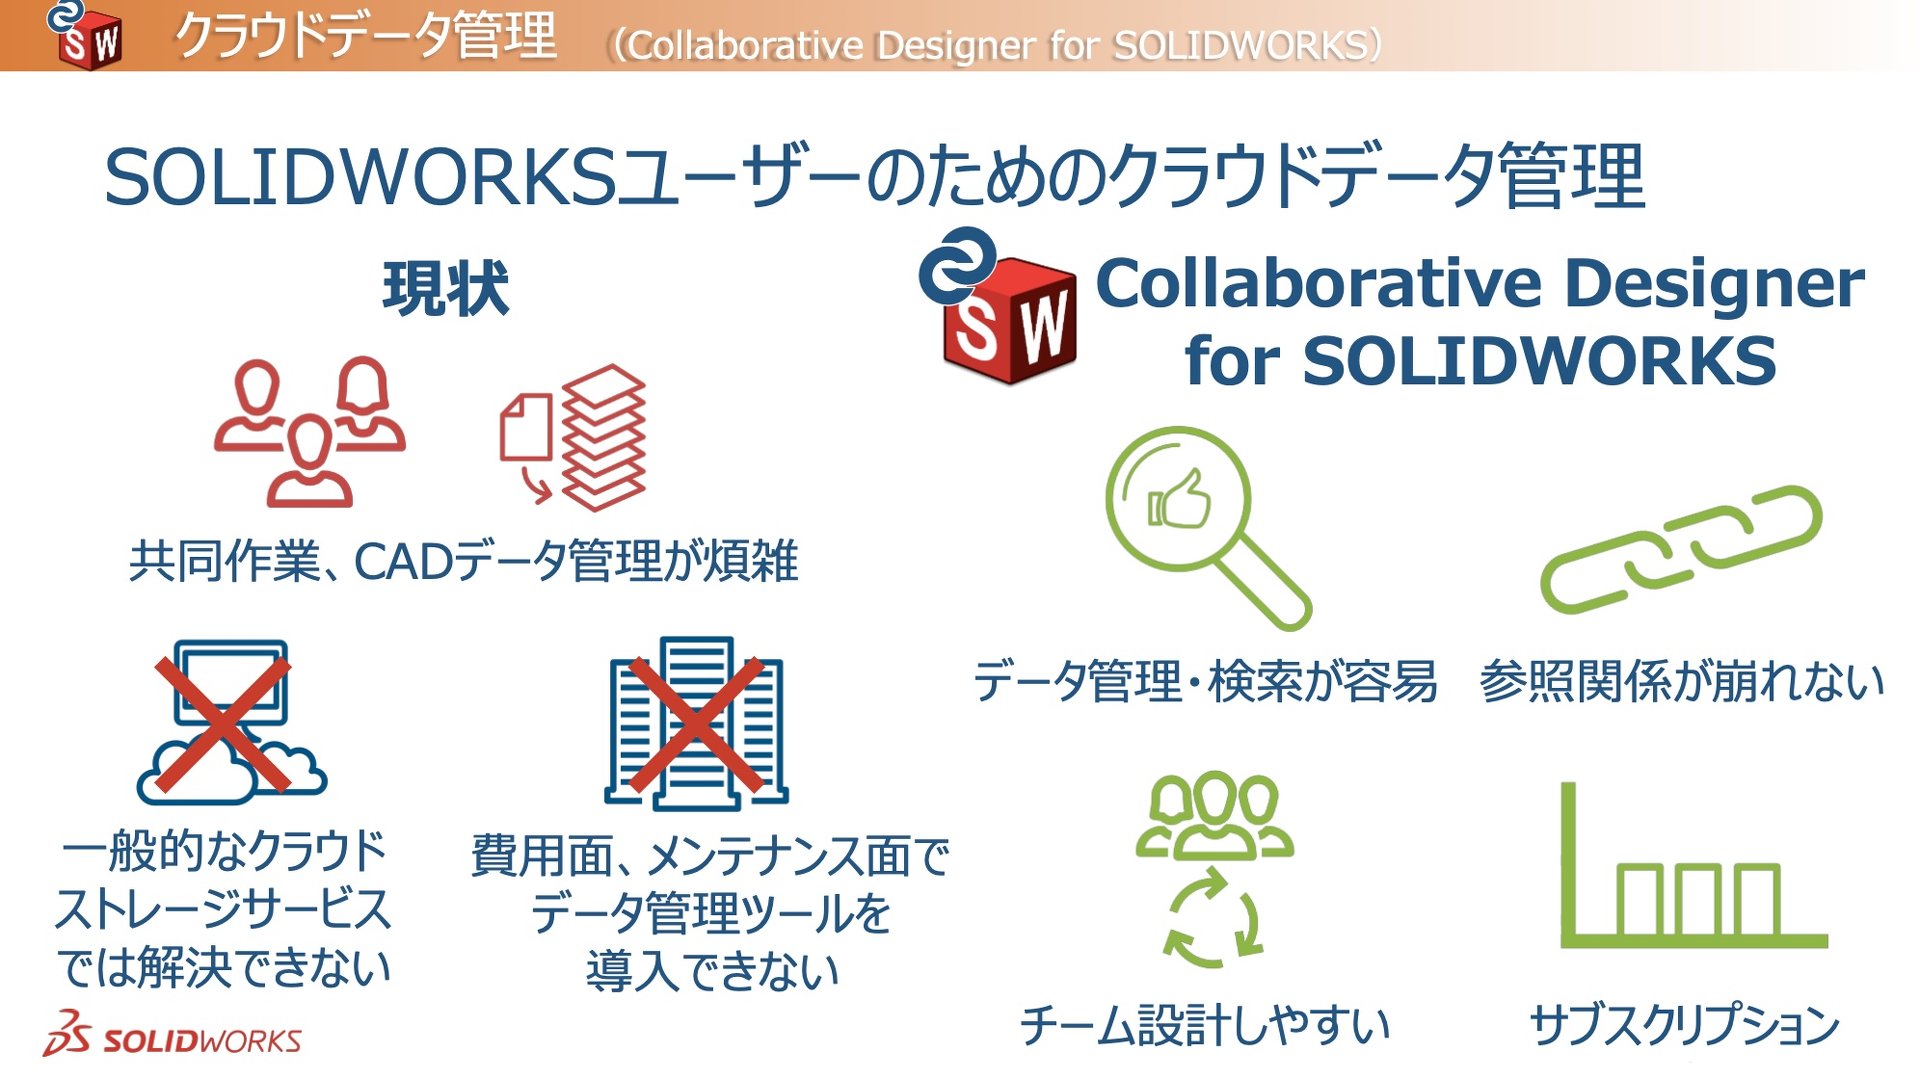 Collaborative Designer for SOLIDWORKSɂNEhf[^ǗmNbNŊgn oF\bh[NXEWp